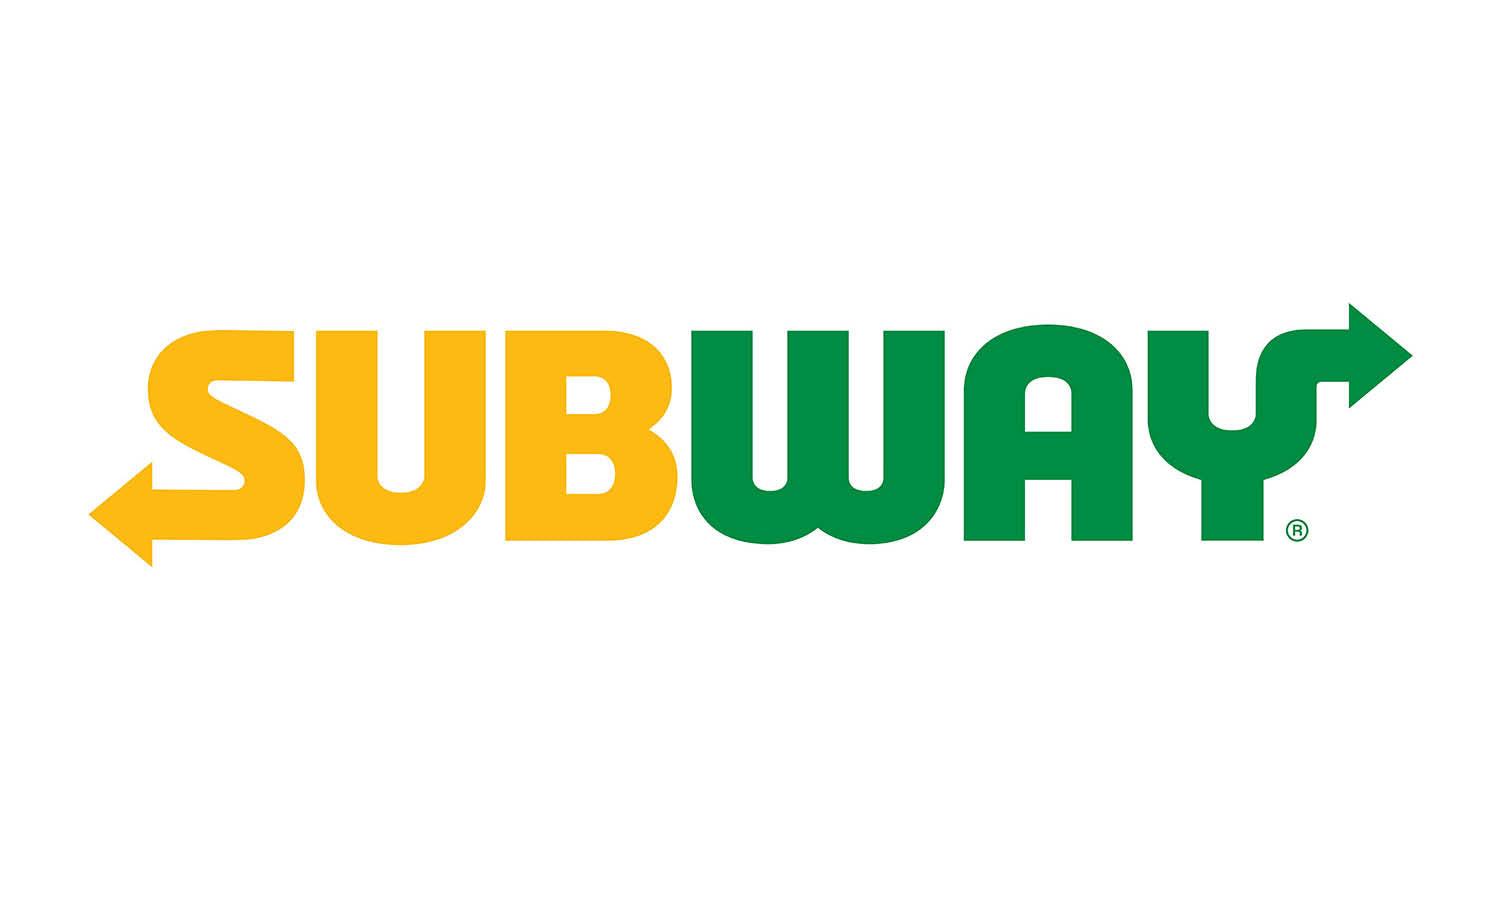 Subway Logo Design: History & Evolution - Kreafolk